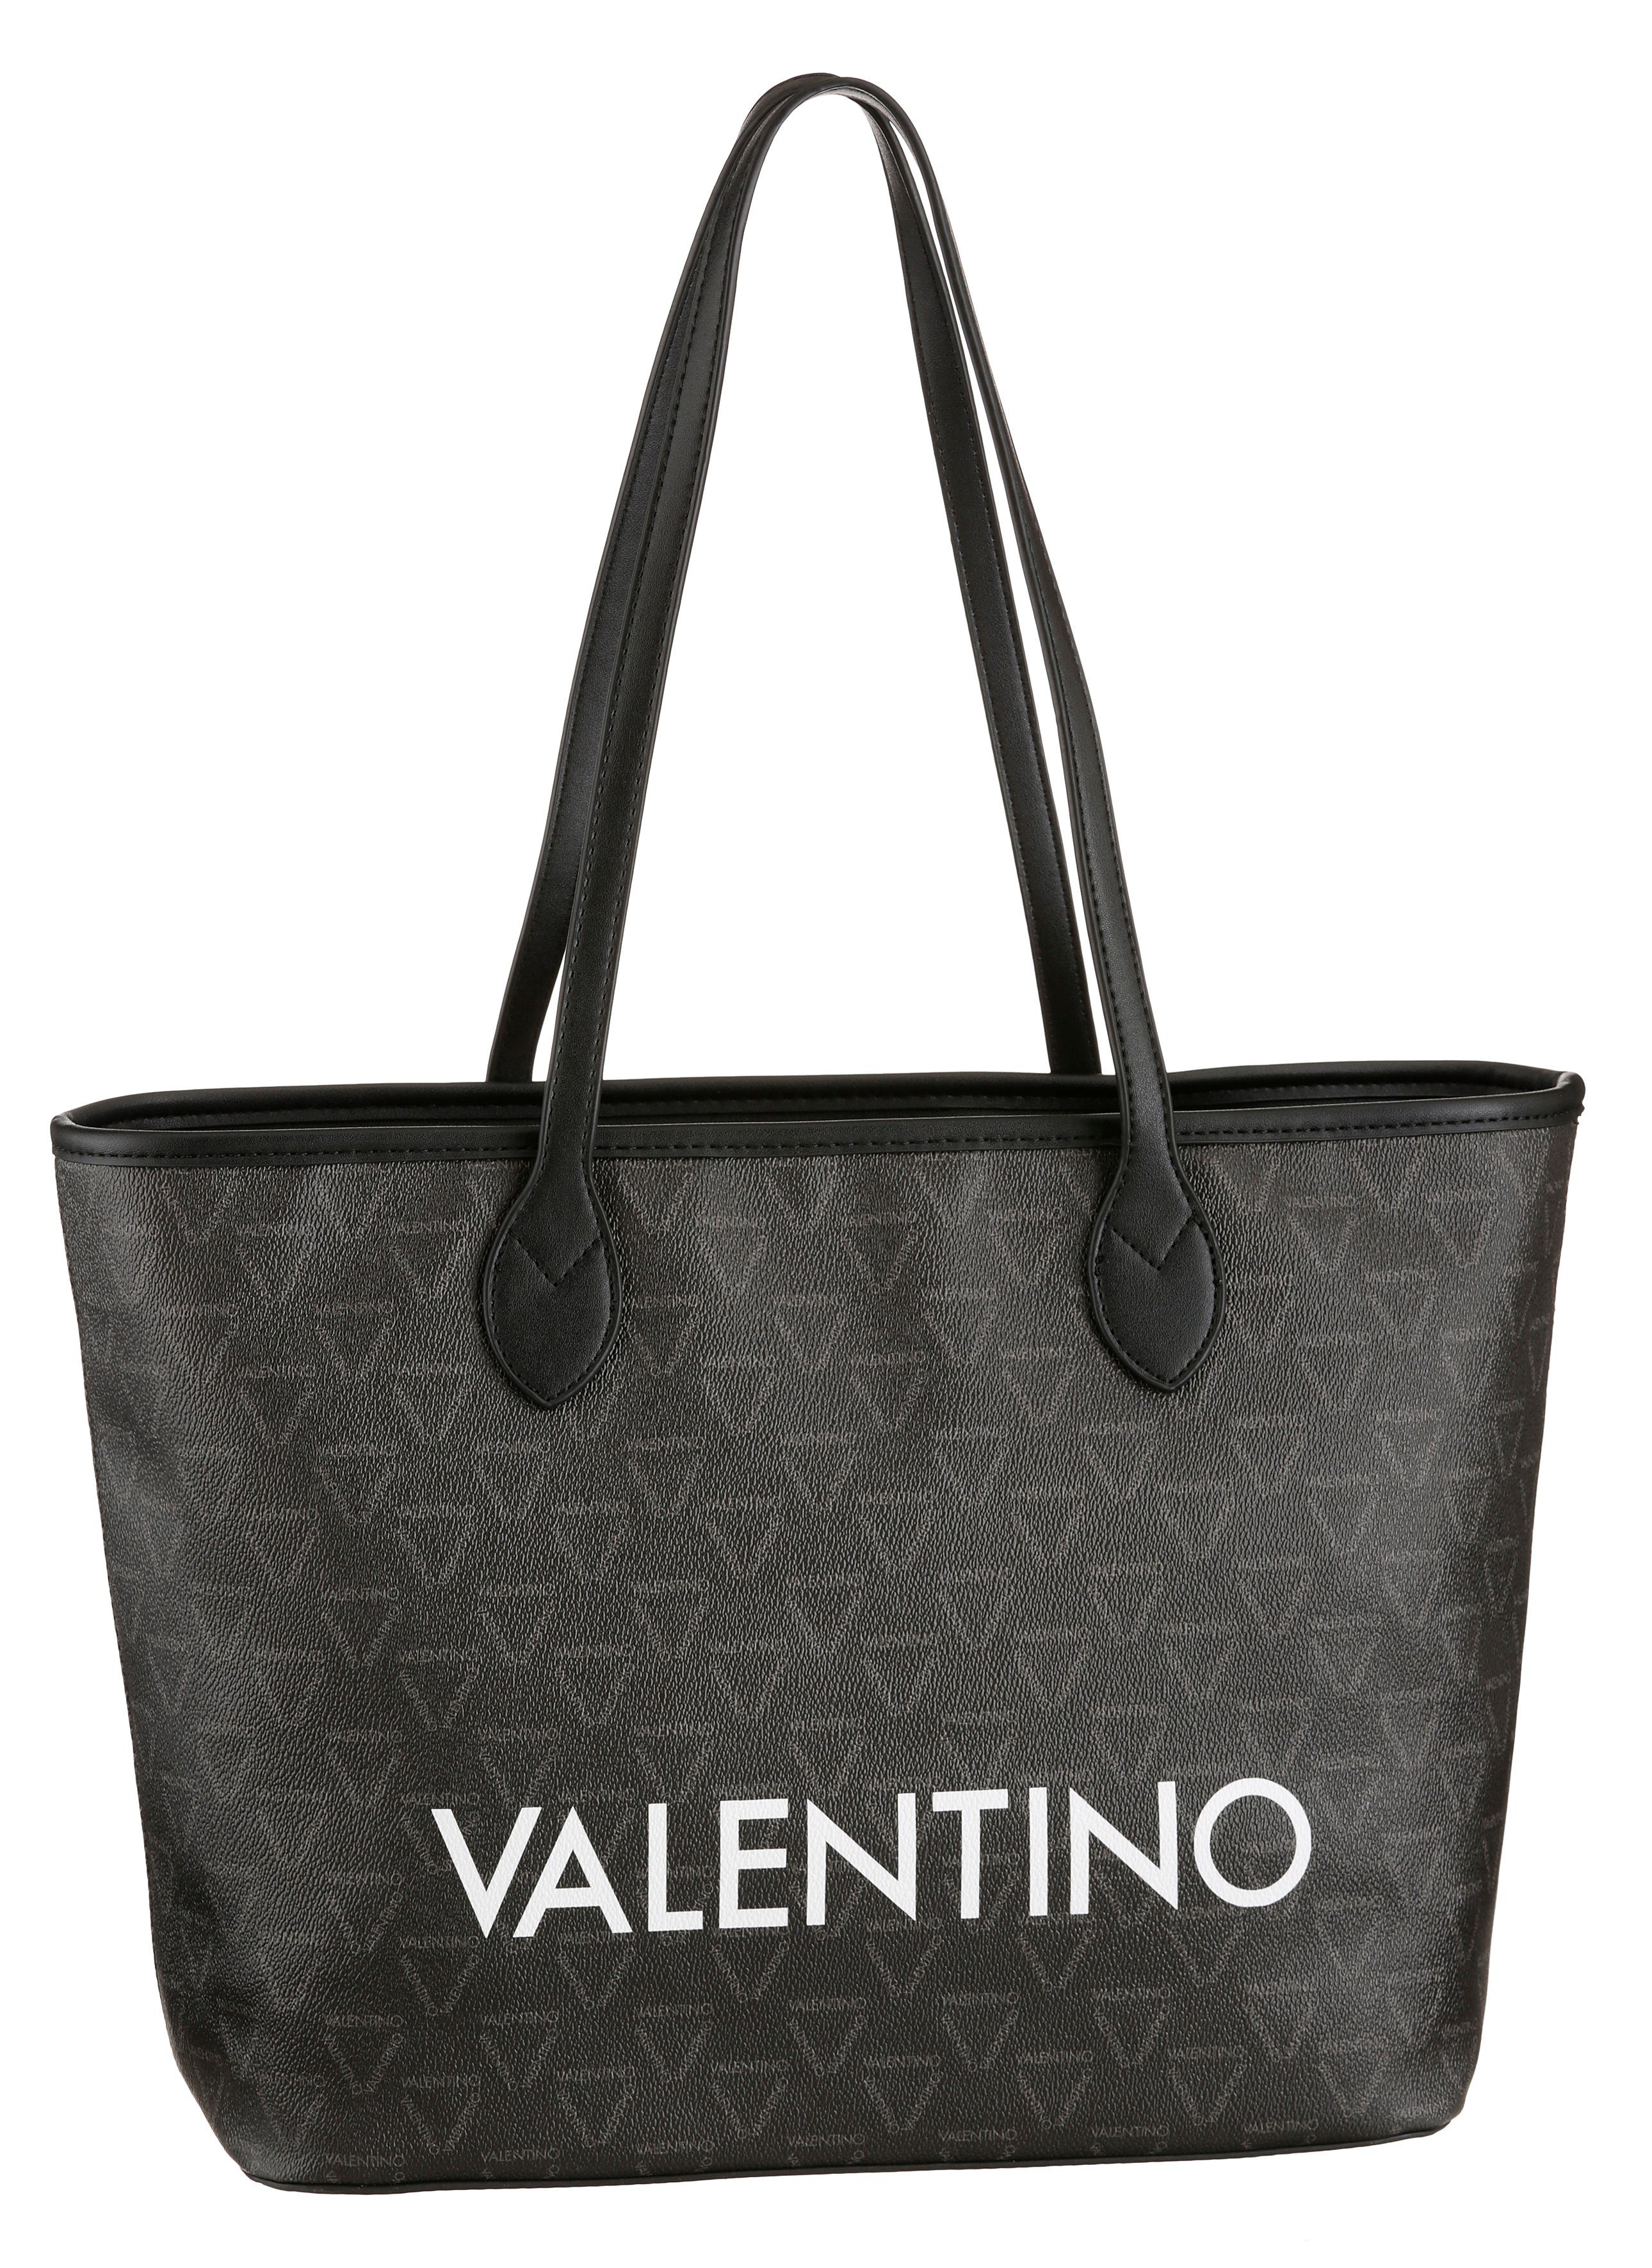 VALENTINO BAGS Shopper »Liuto«, Polyester kaufen | OTTO